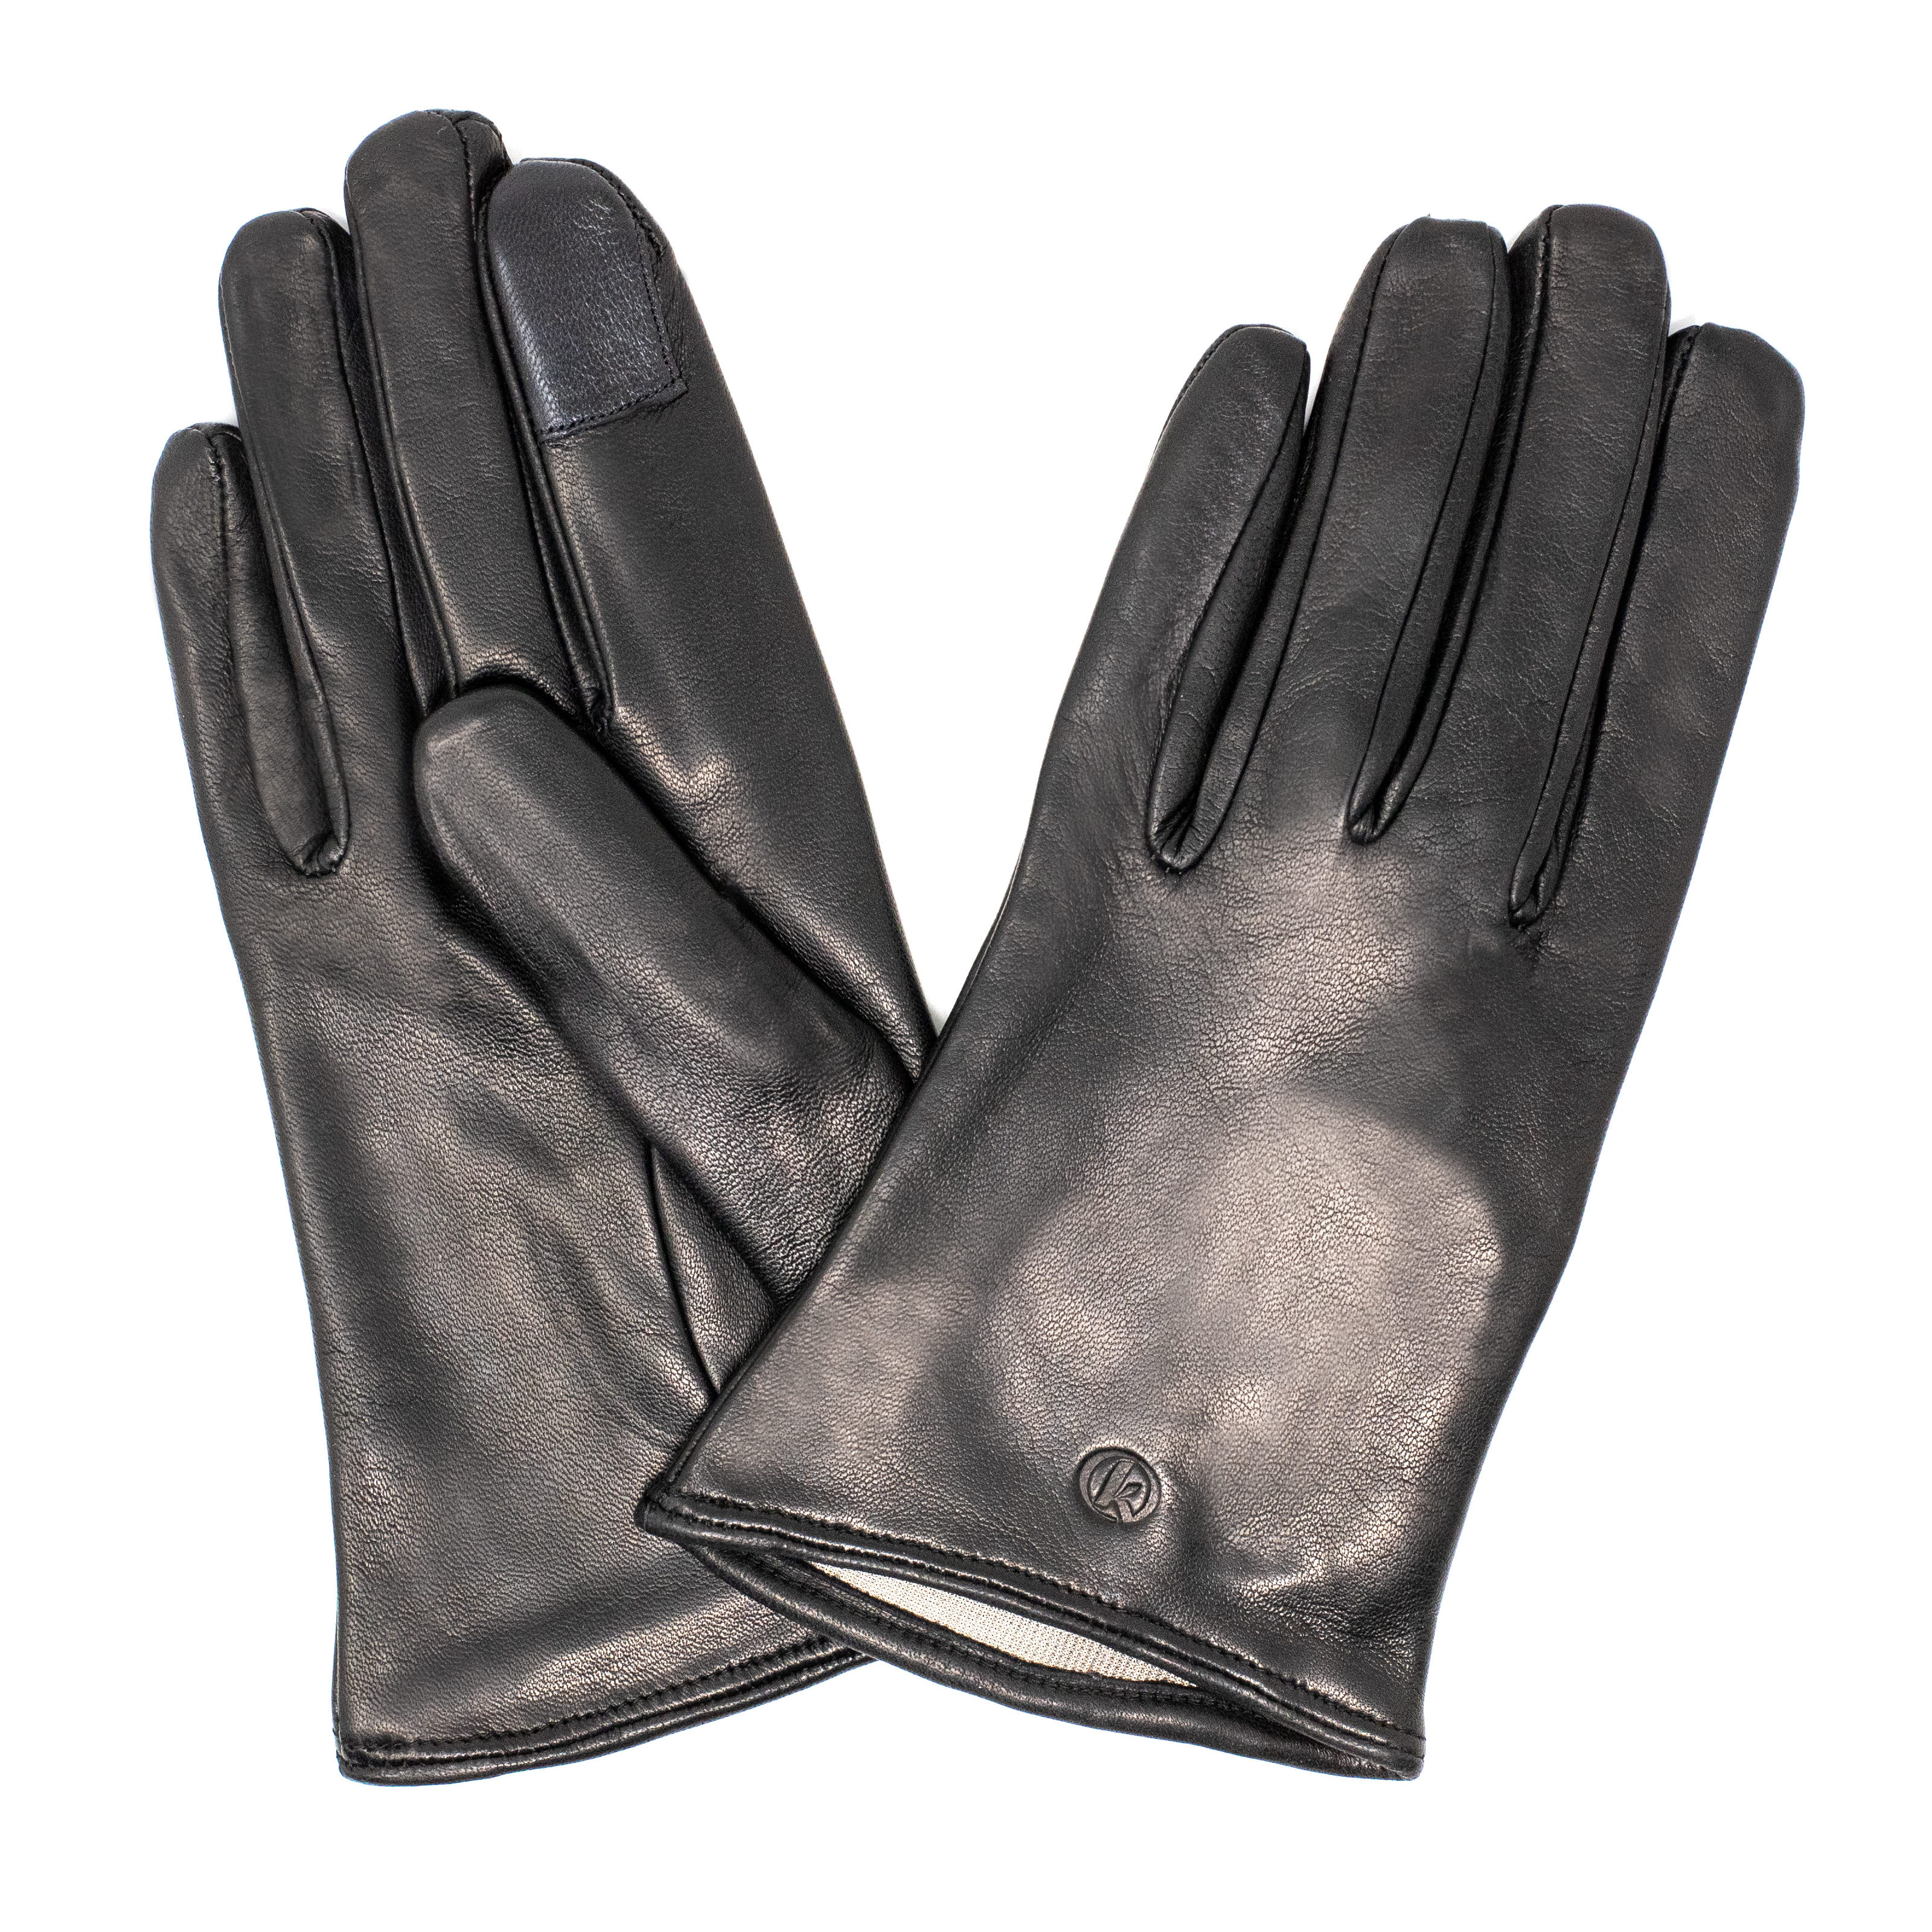 Kendrick gloves